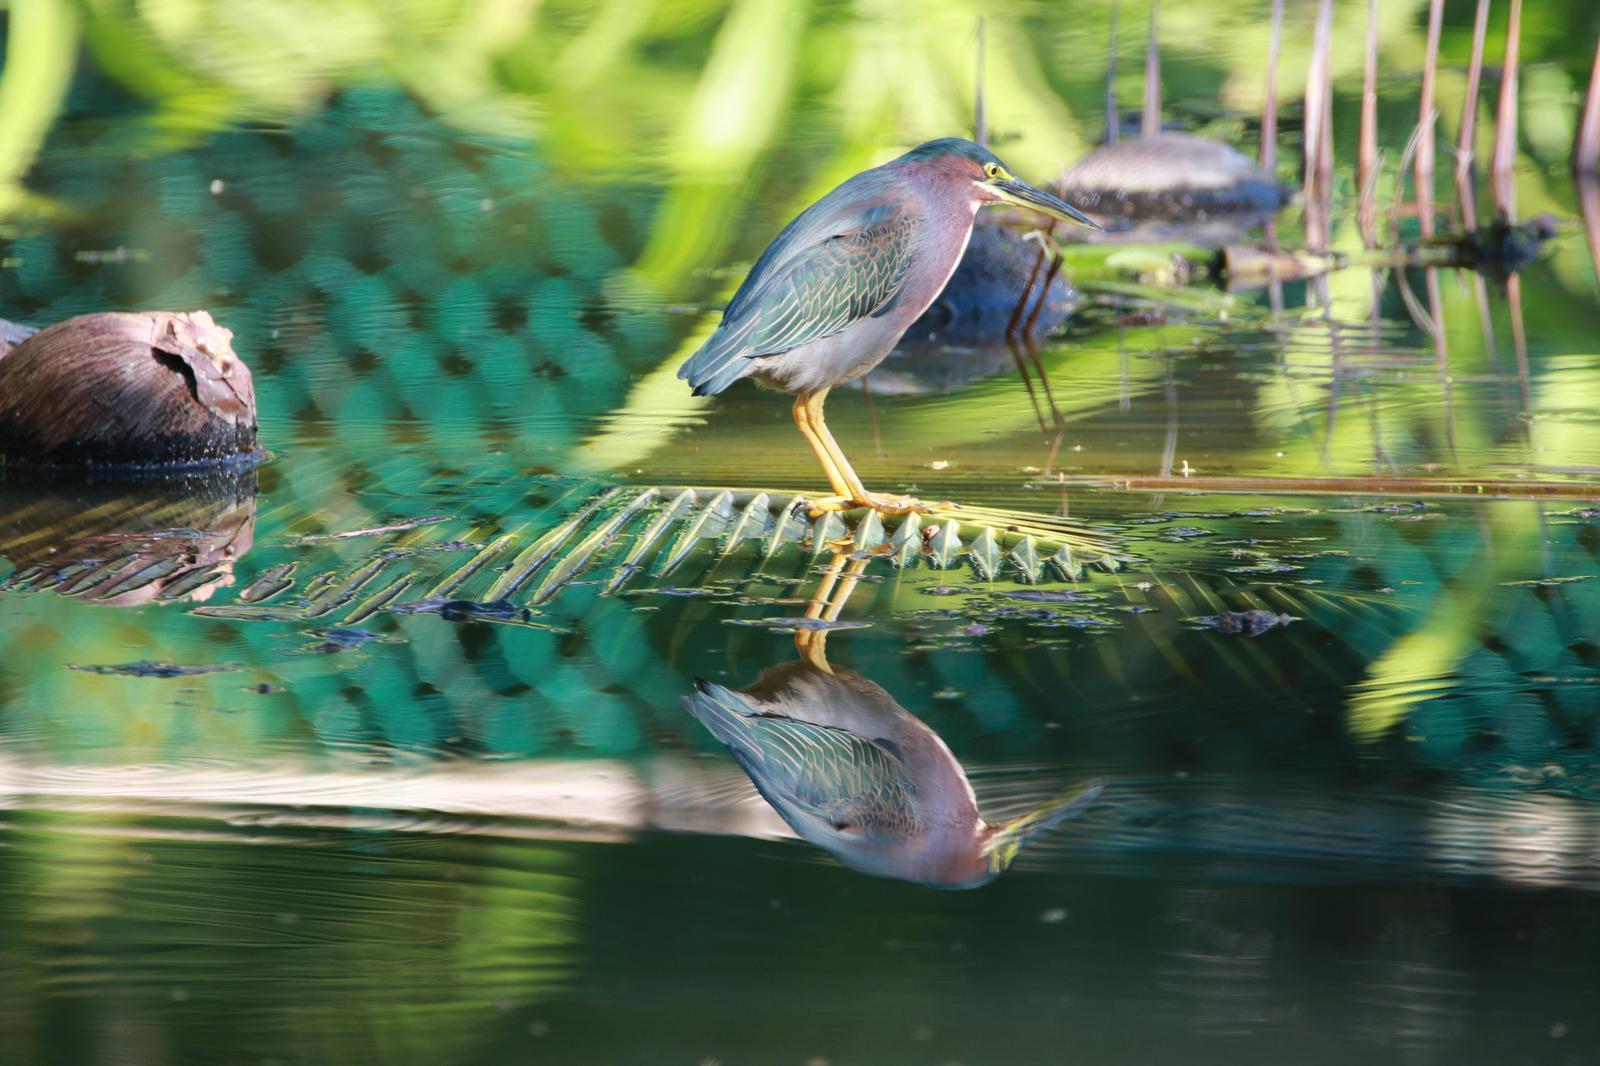 Green Heron Photo by Daniel Rivet